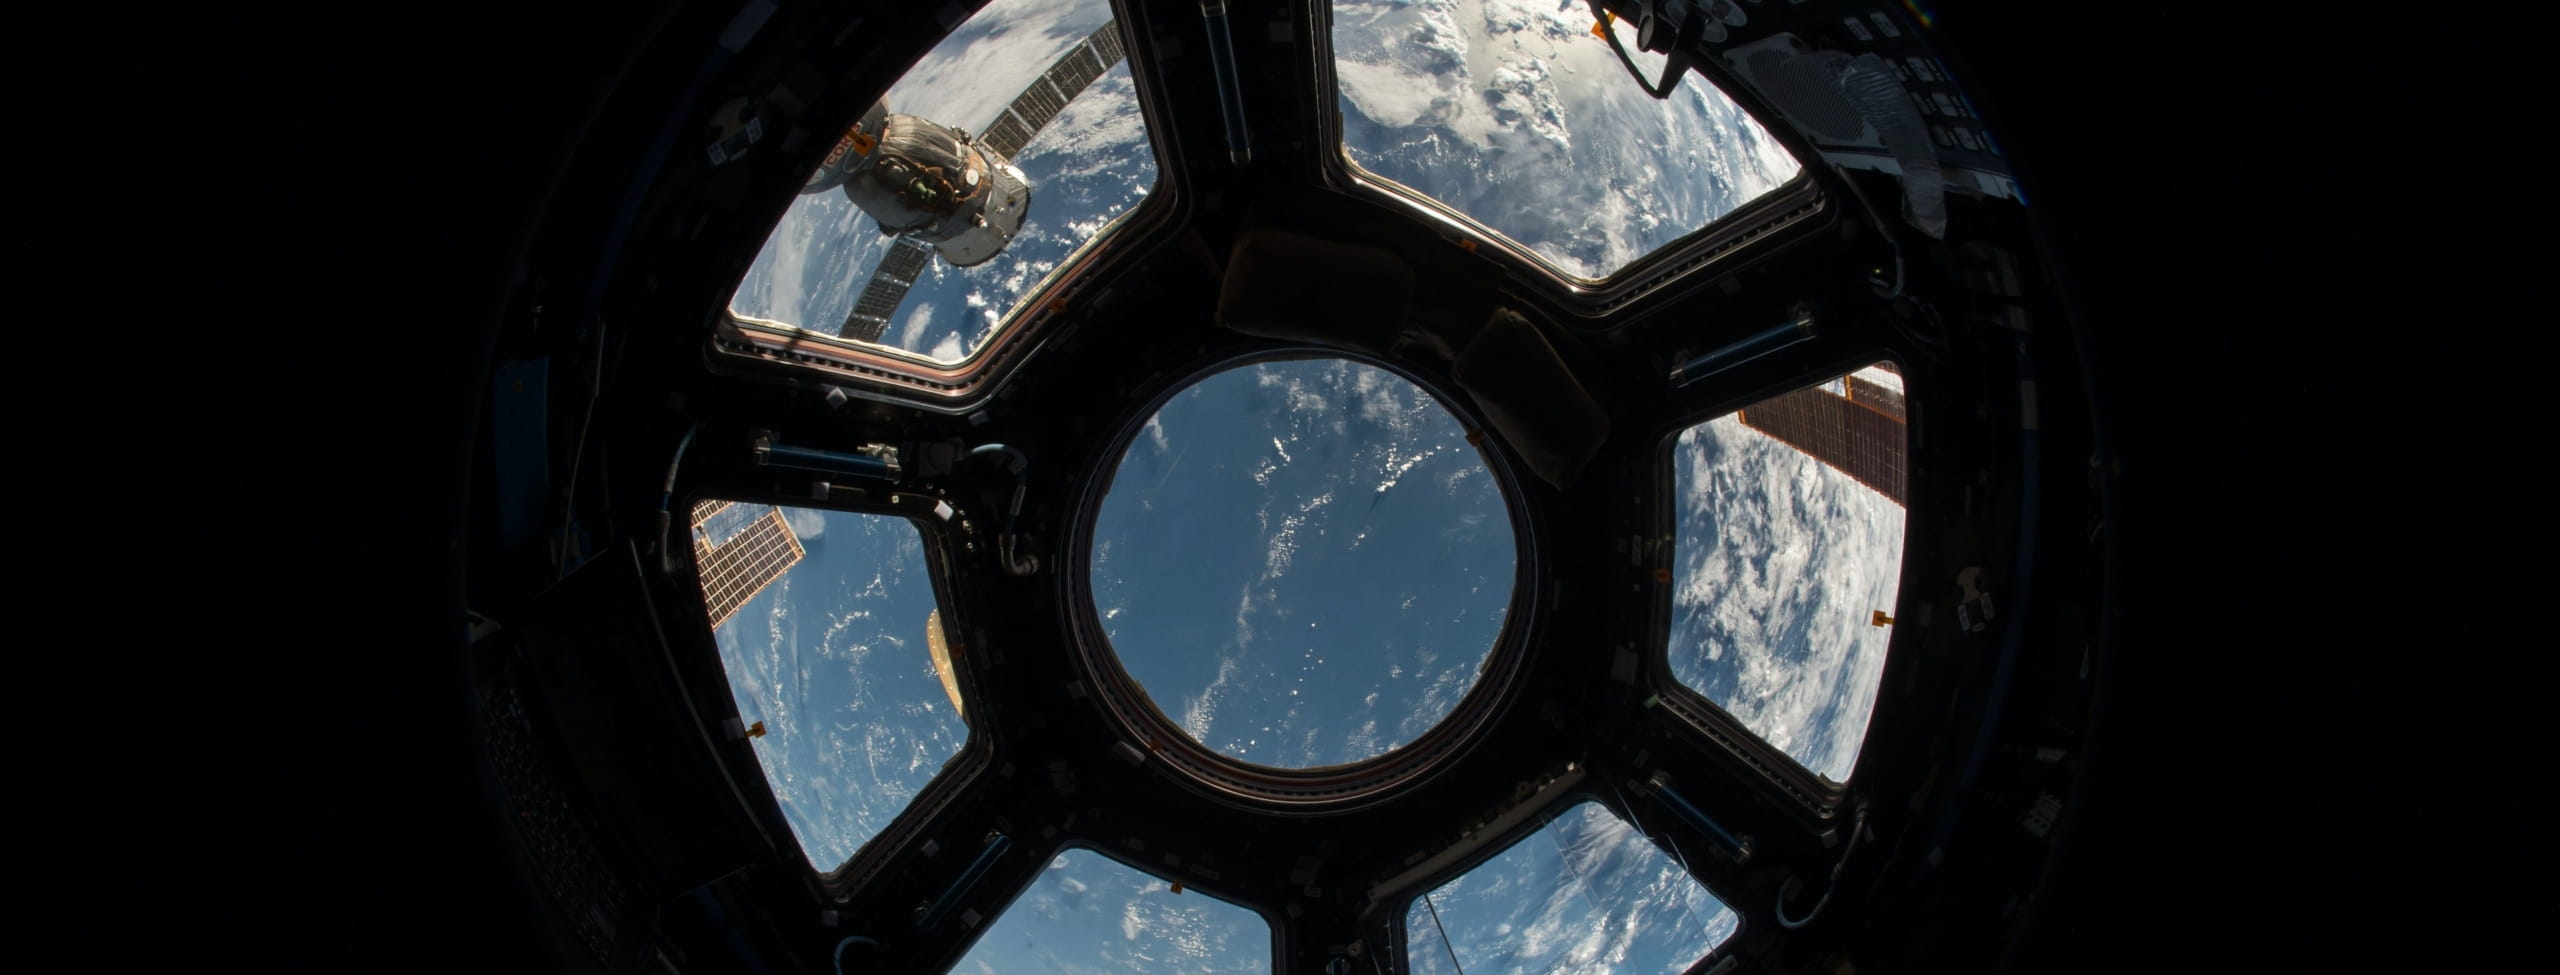 Space shuttle window view